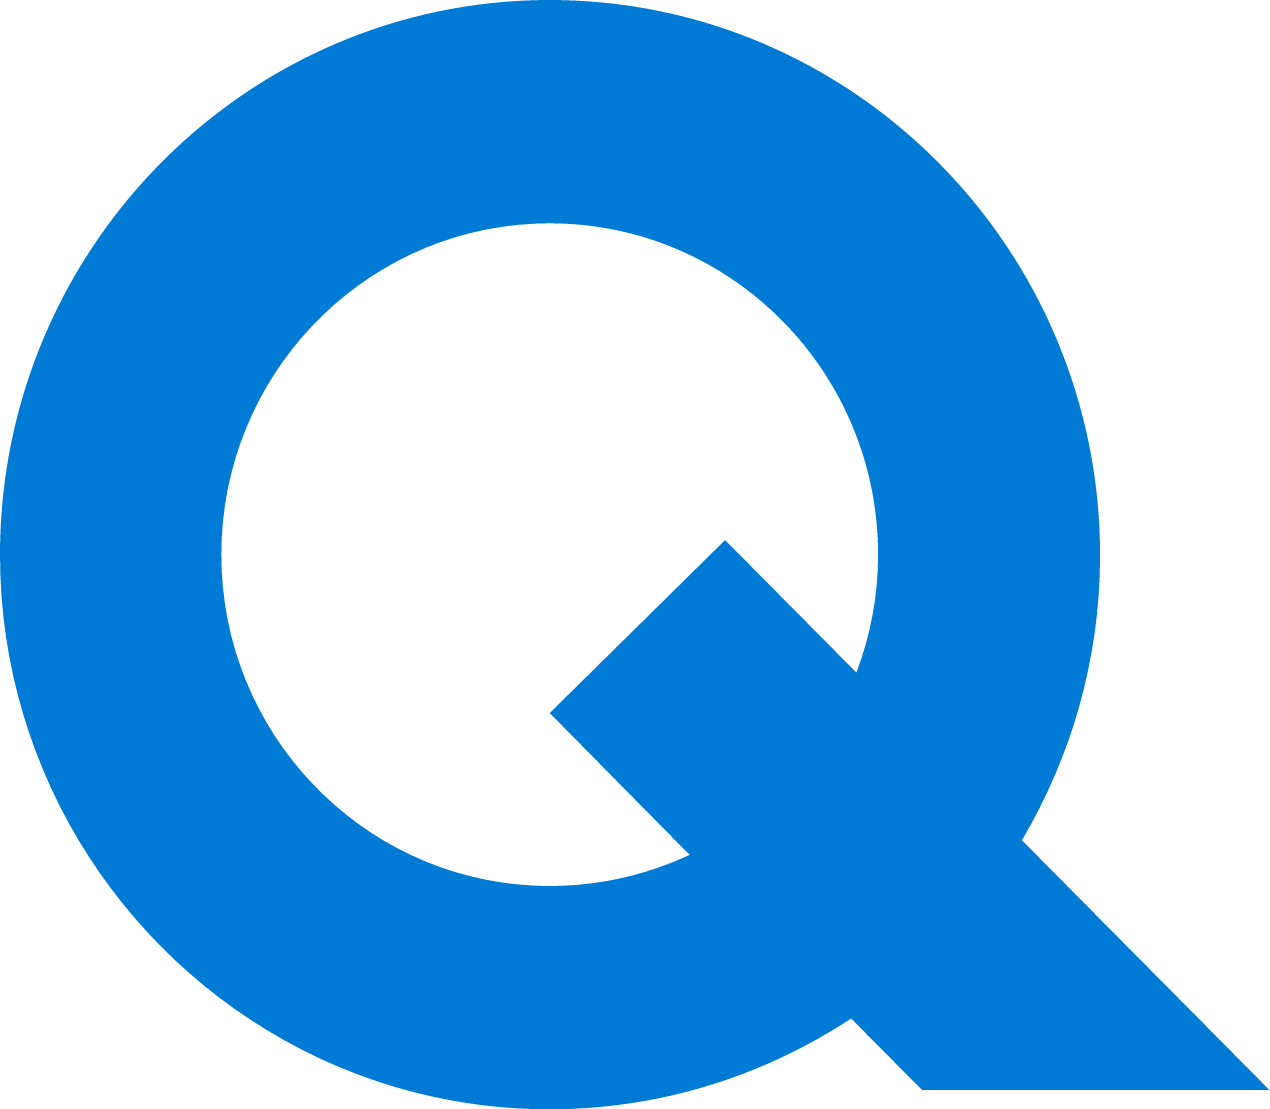 QE Logo